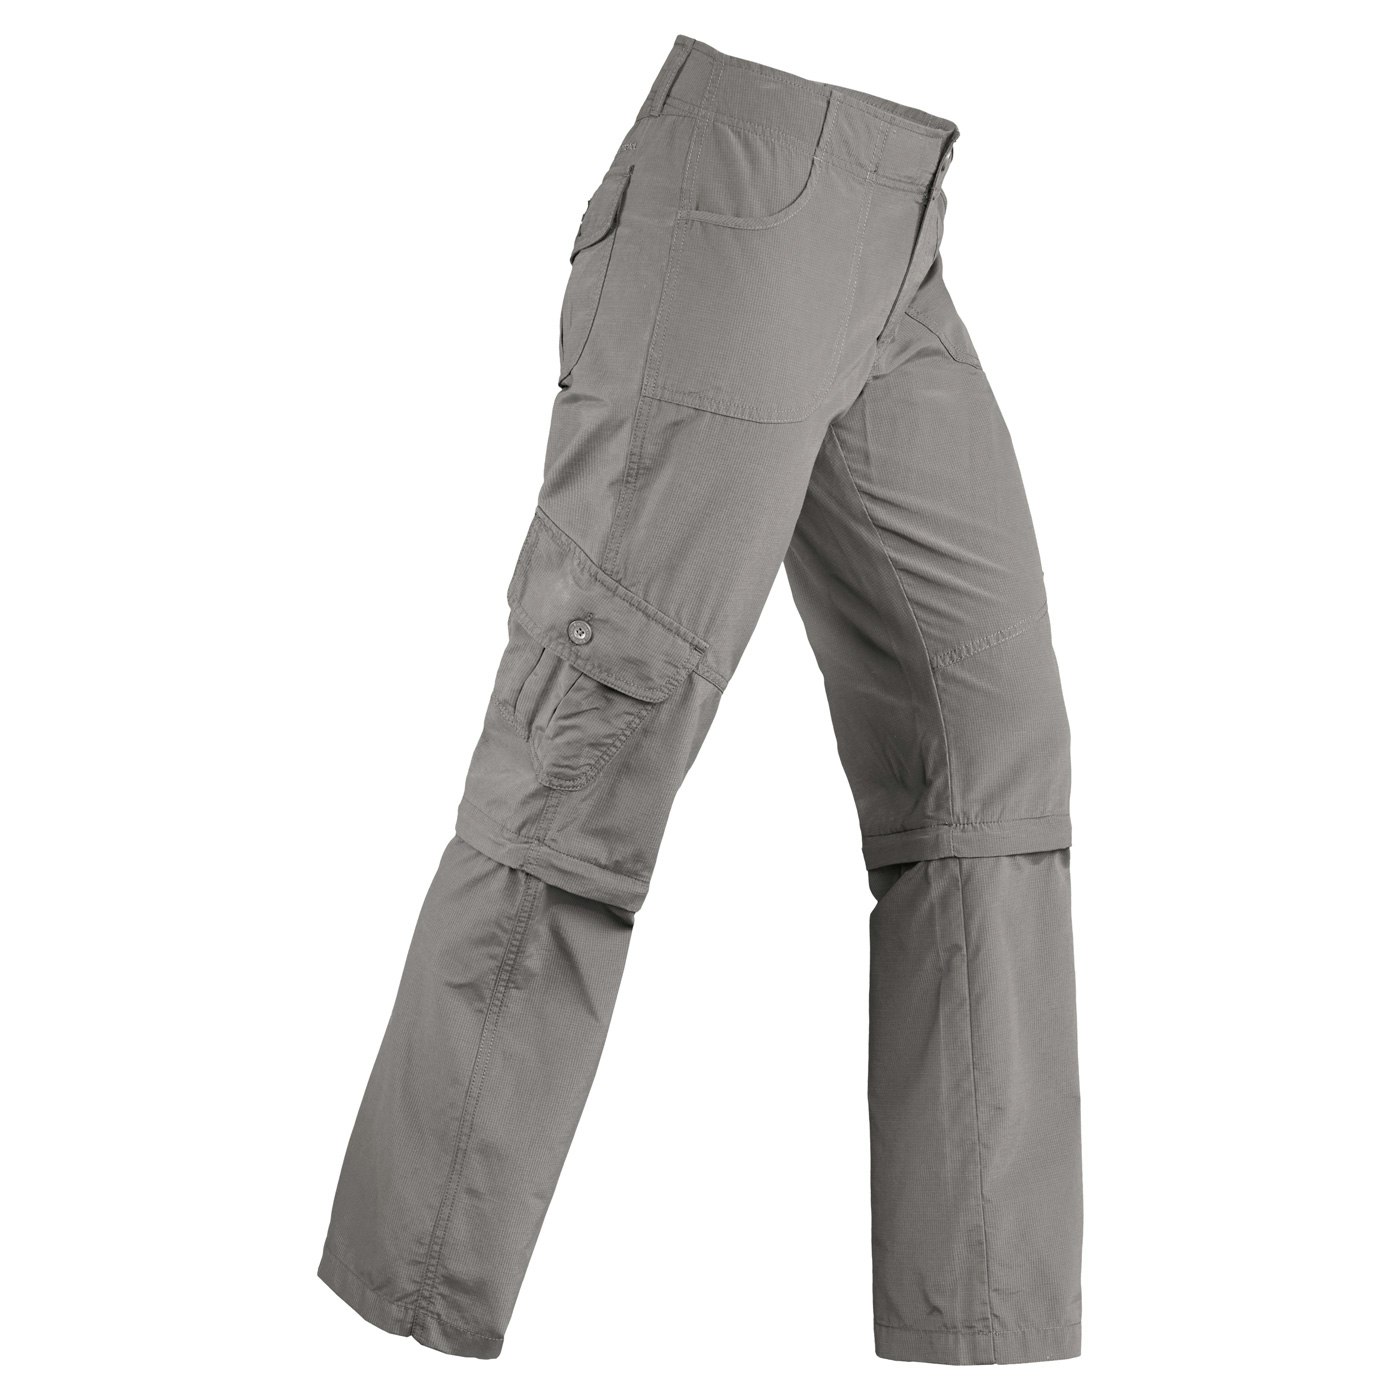 women's travel pants with zipper pockets